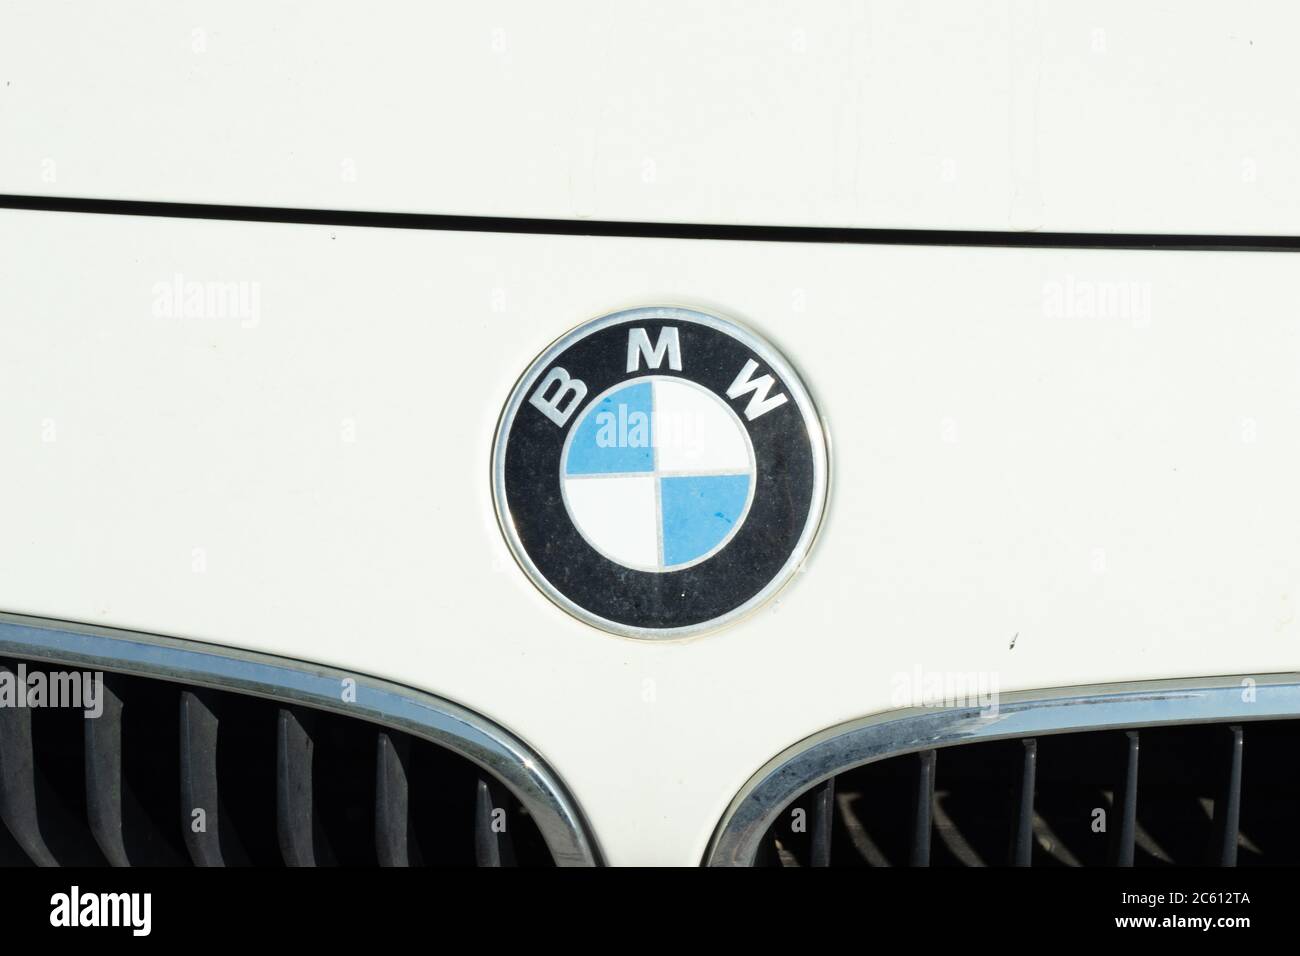 File:BMW320i E46 Lim.jpg - Wikimedia Commons